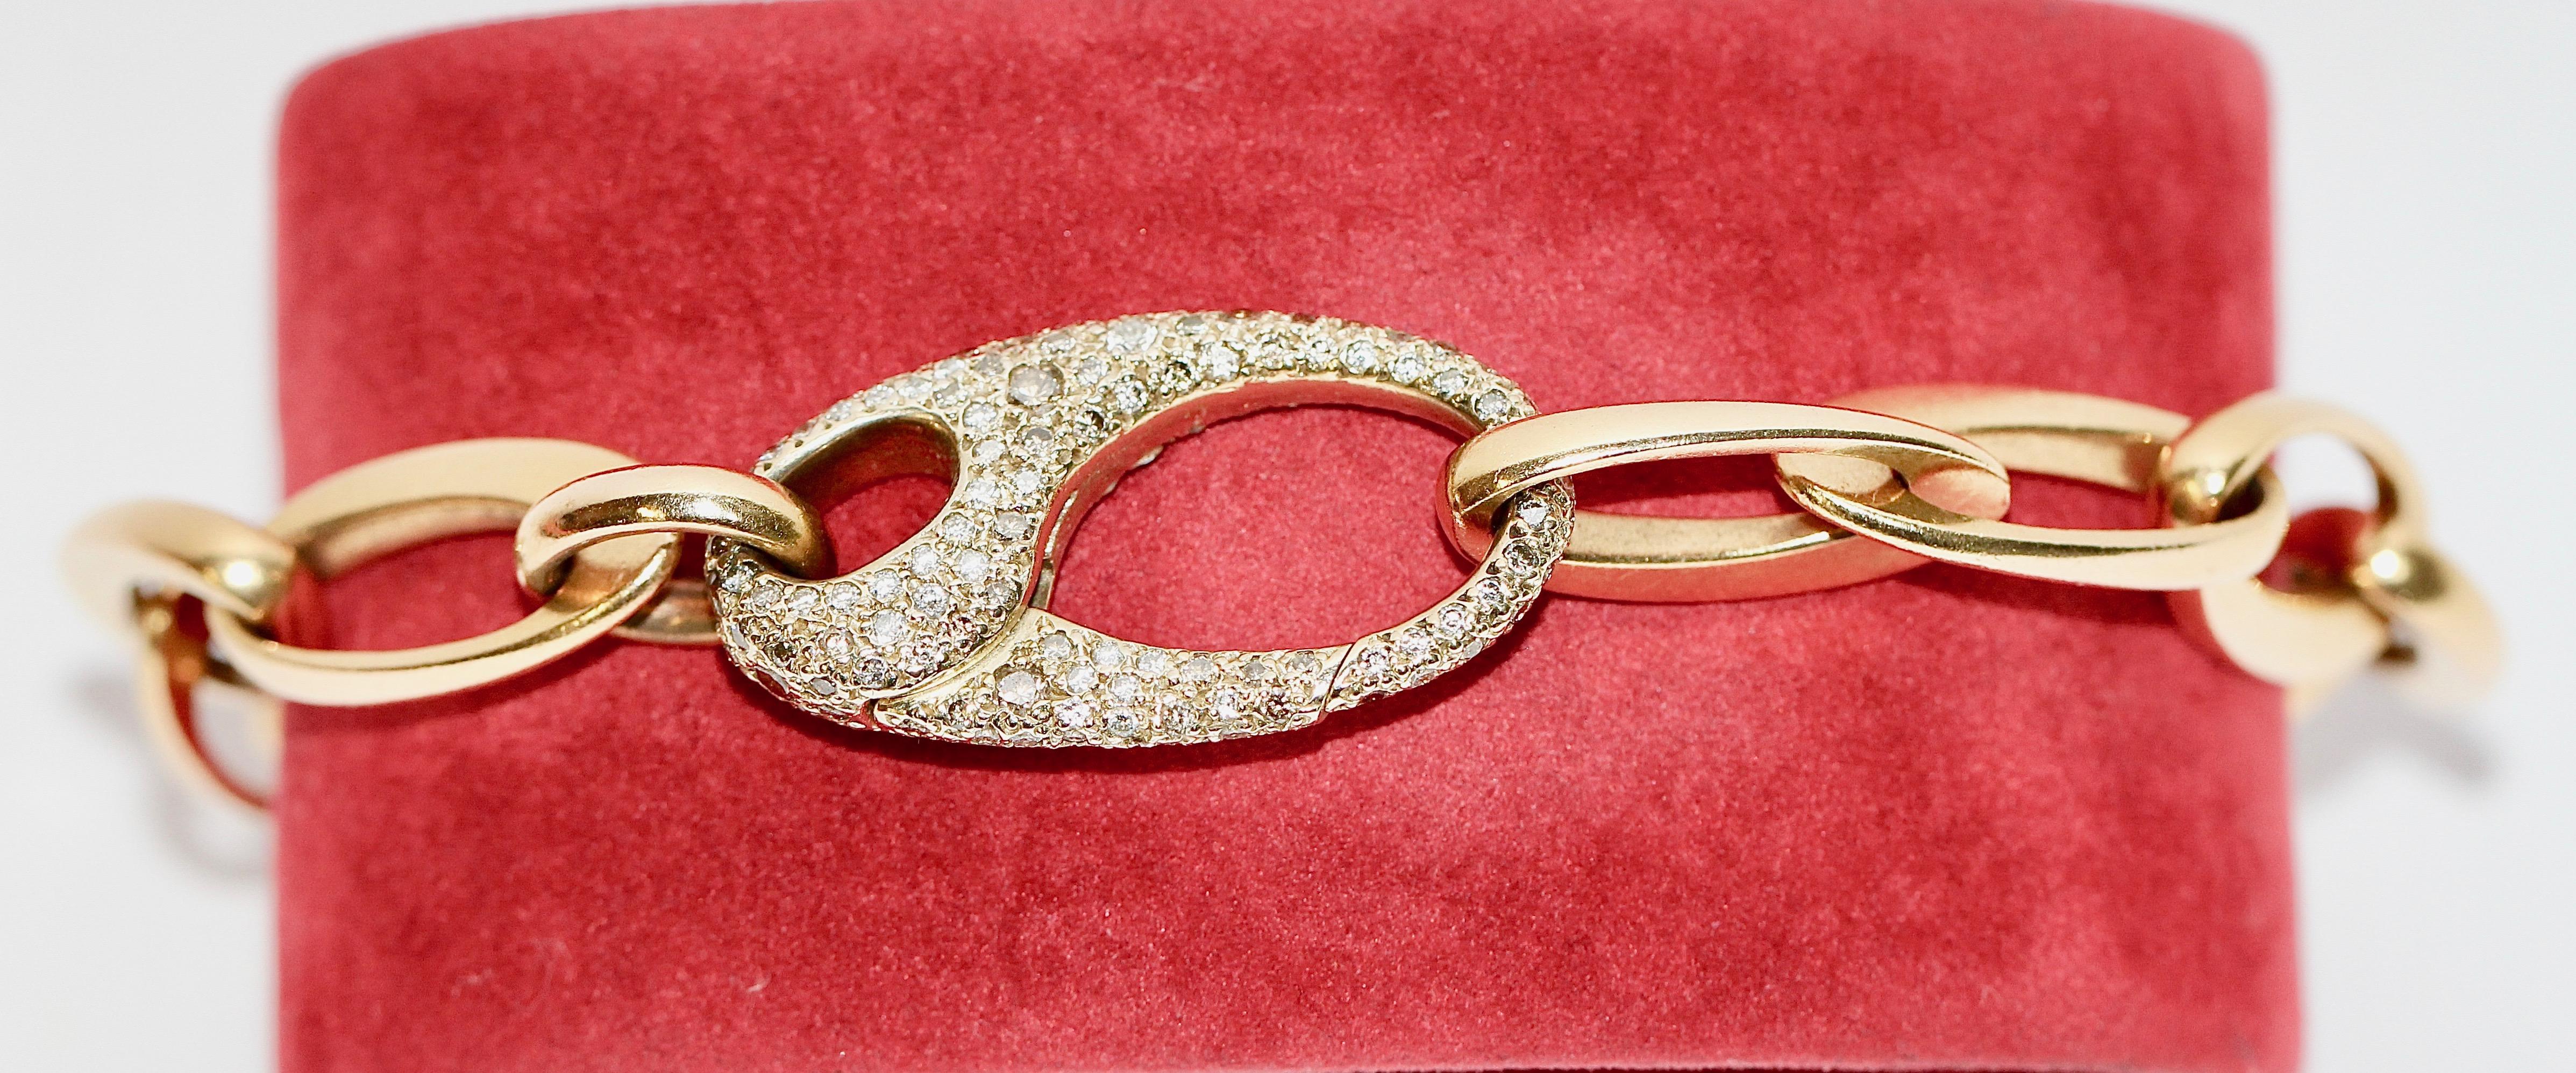 Beautiful designer bracelet made by Pomellato. 18k gold with diamonds.

Clasp fully set with diamonds.